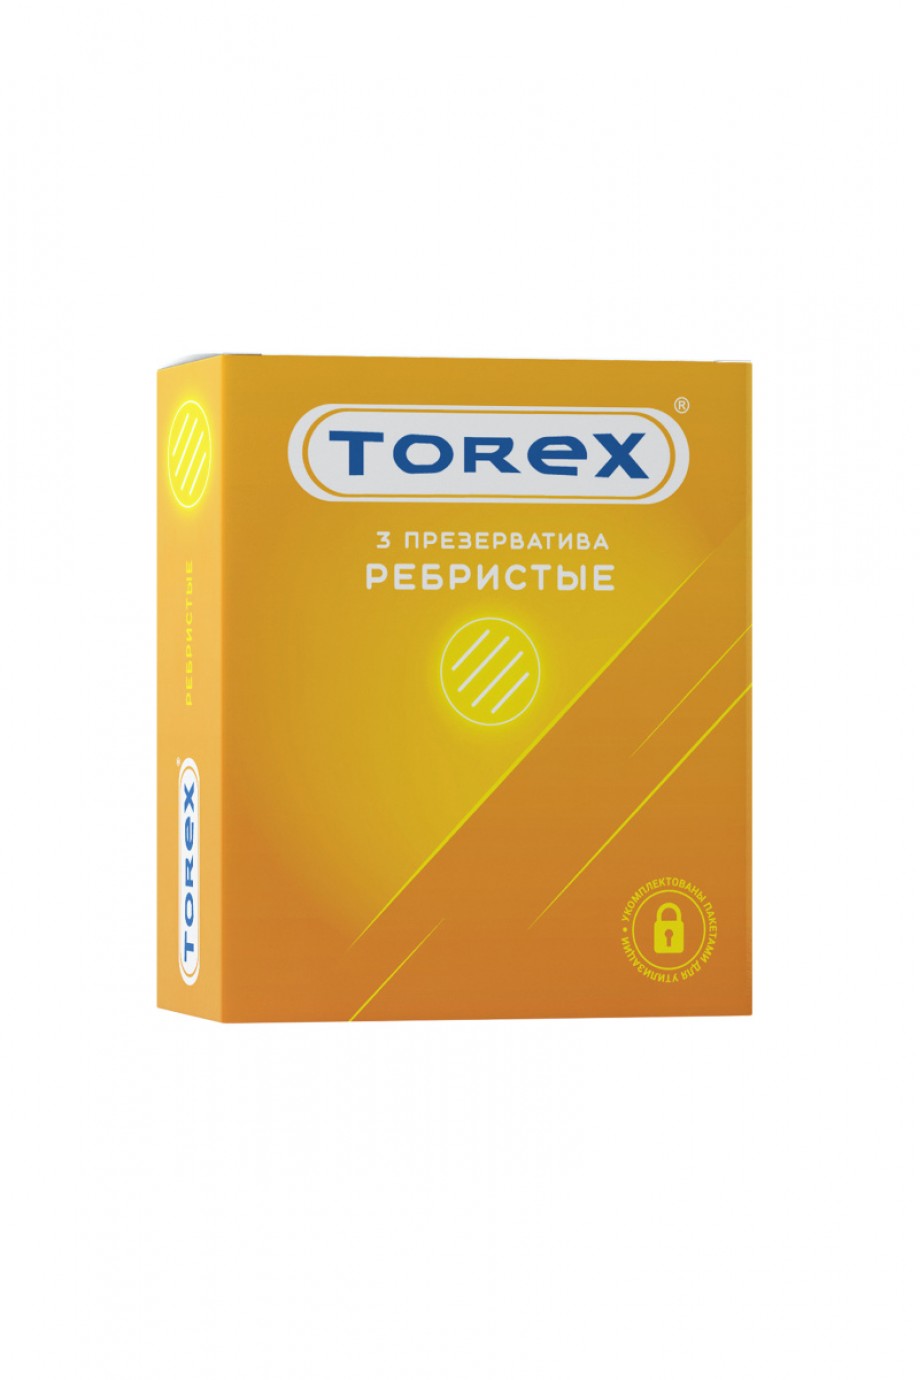 Презервативы TOREX ребристые, латекс, 3 шт